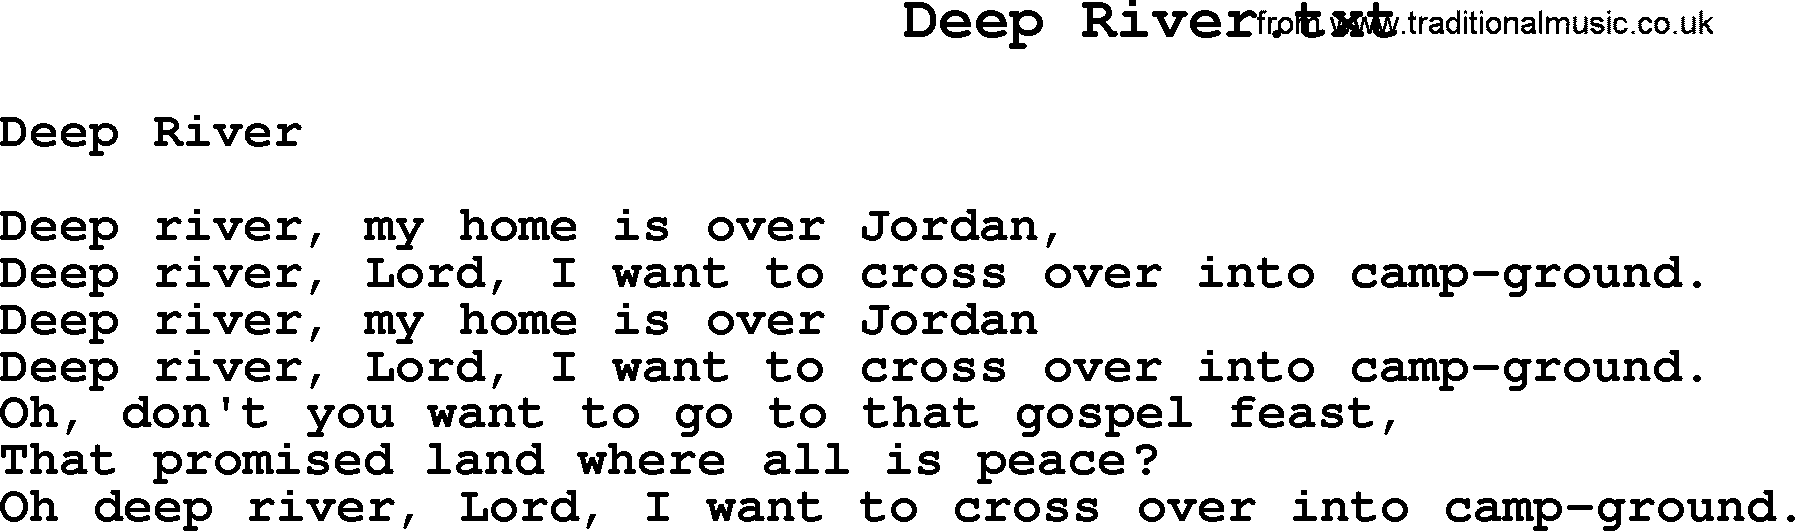 Negro Spiritual Song Lyrics for Deep River